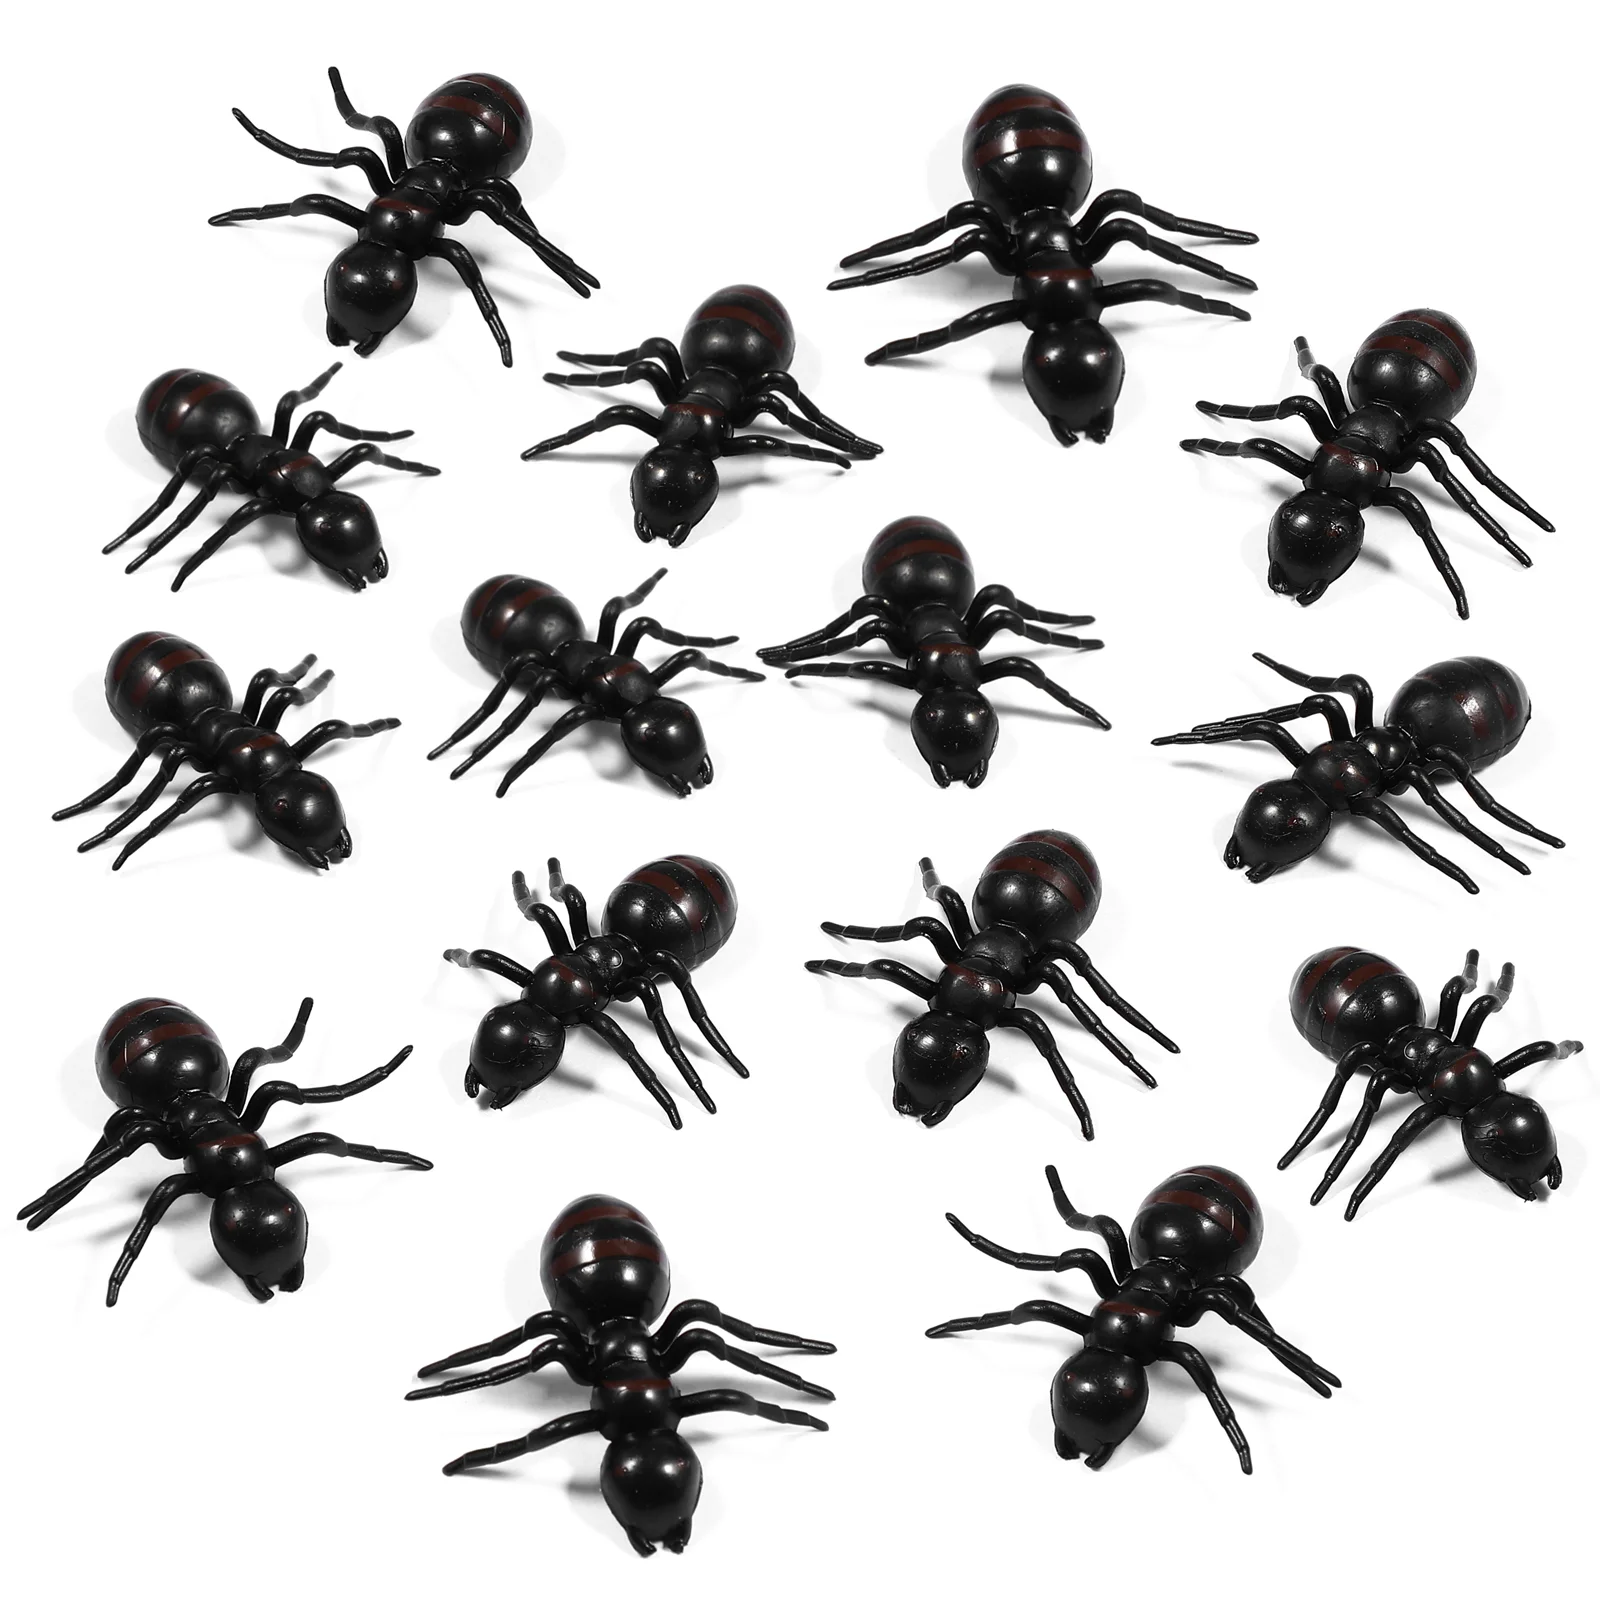 

Gift Accessories Animal Insect Simulation Fake Big Ant Small Toys Halloween April Fools Day Model Decor Pod ignite 5000 Bizarre